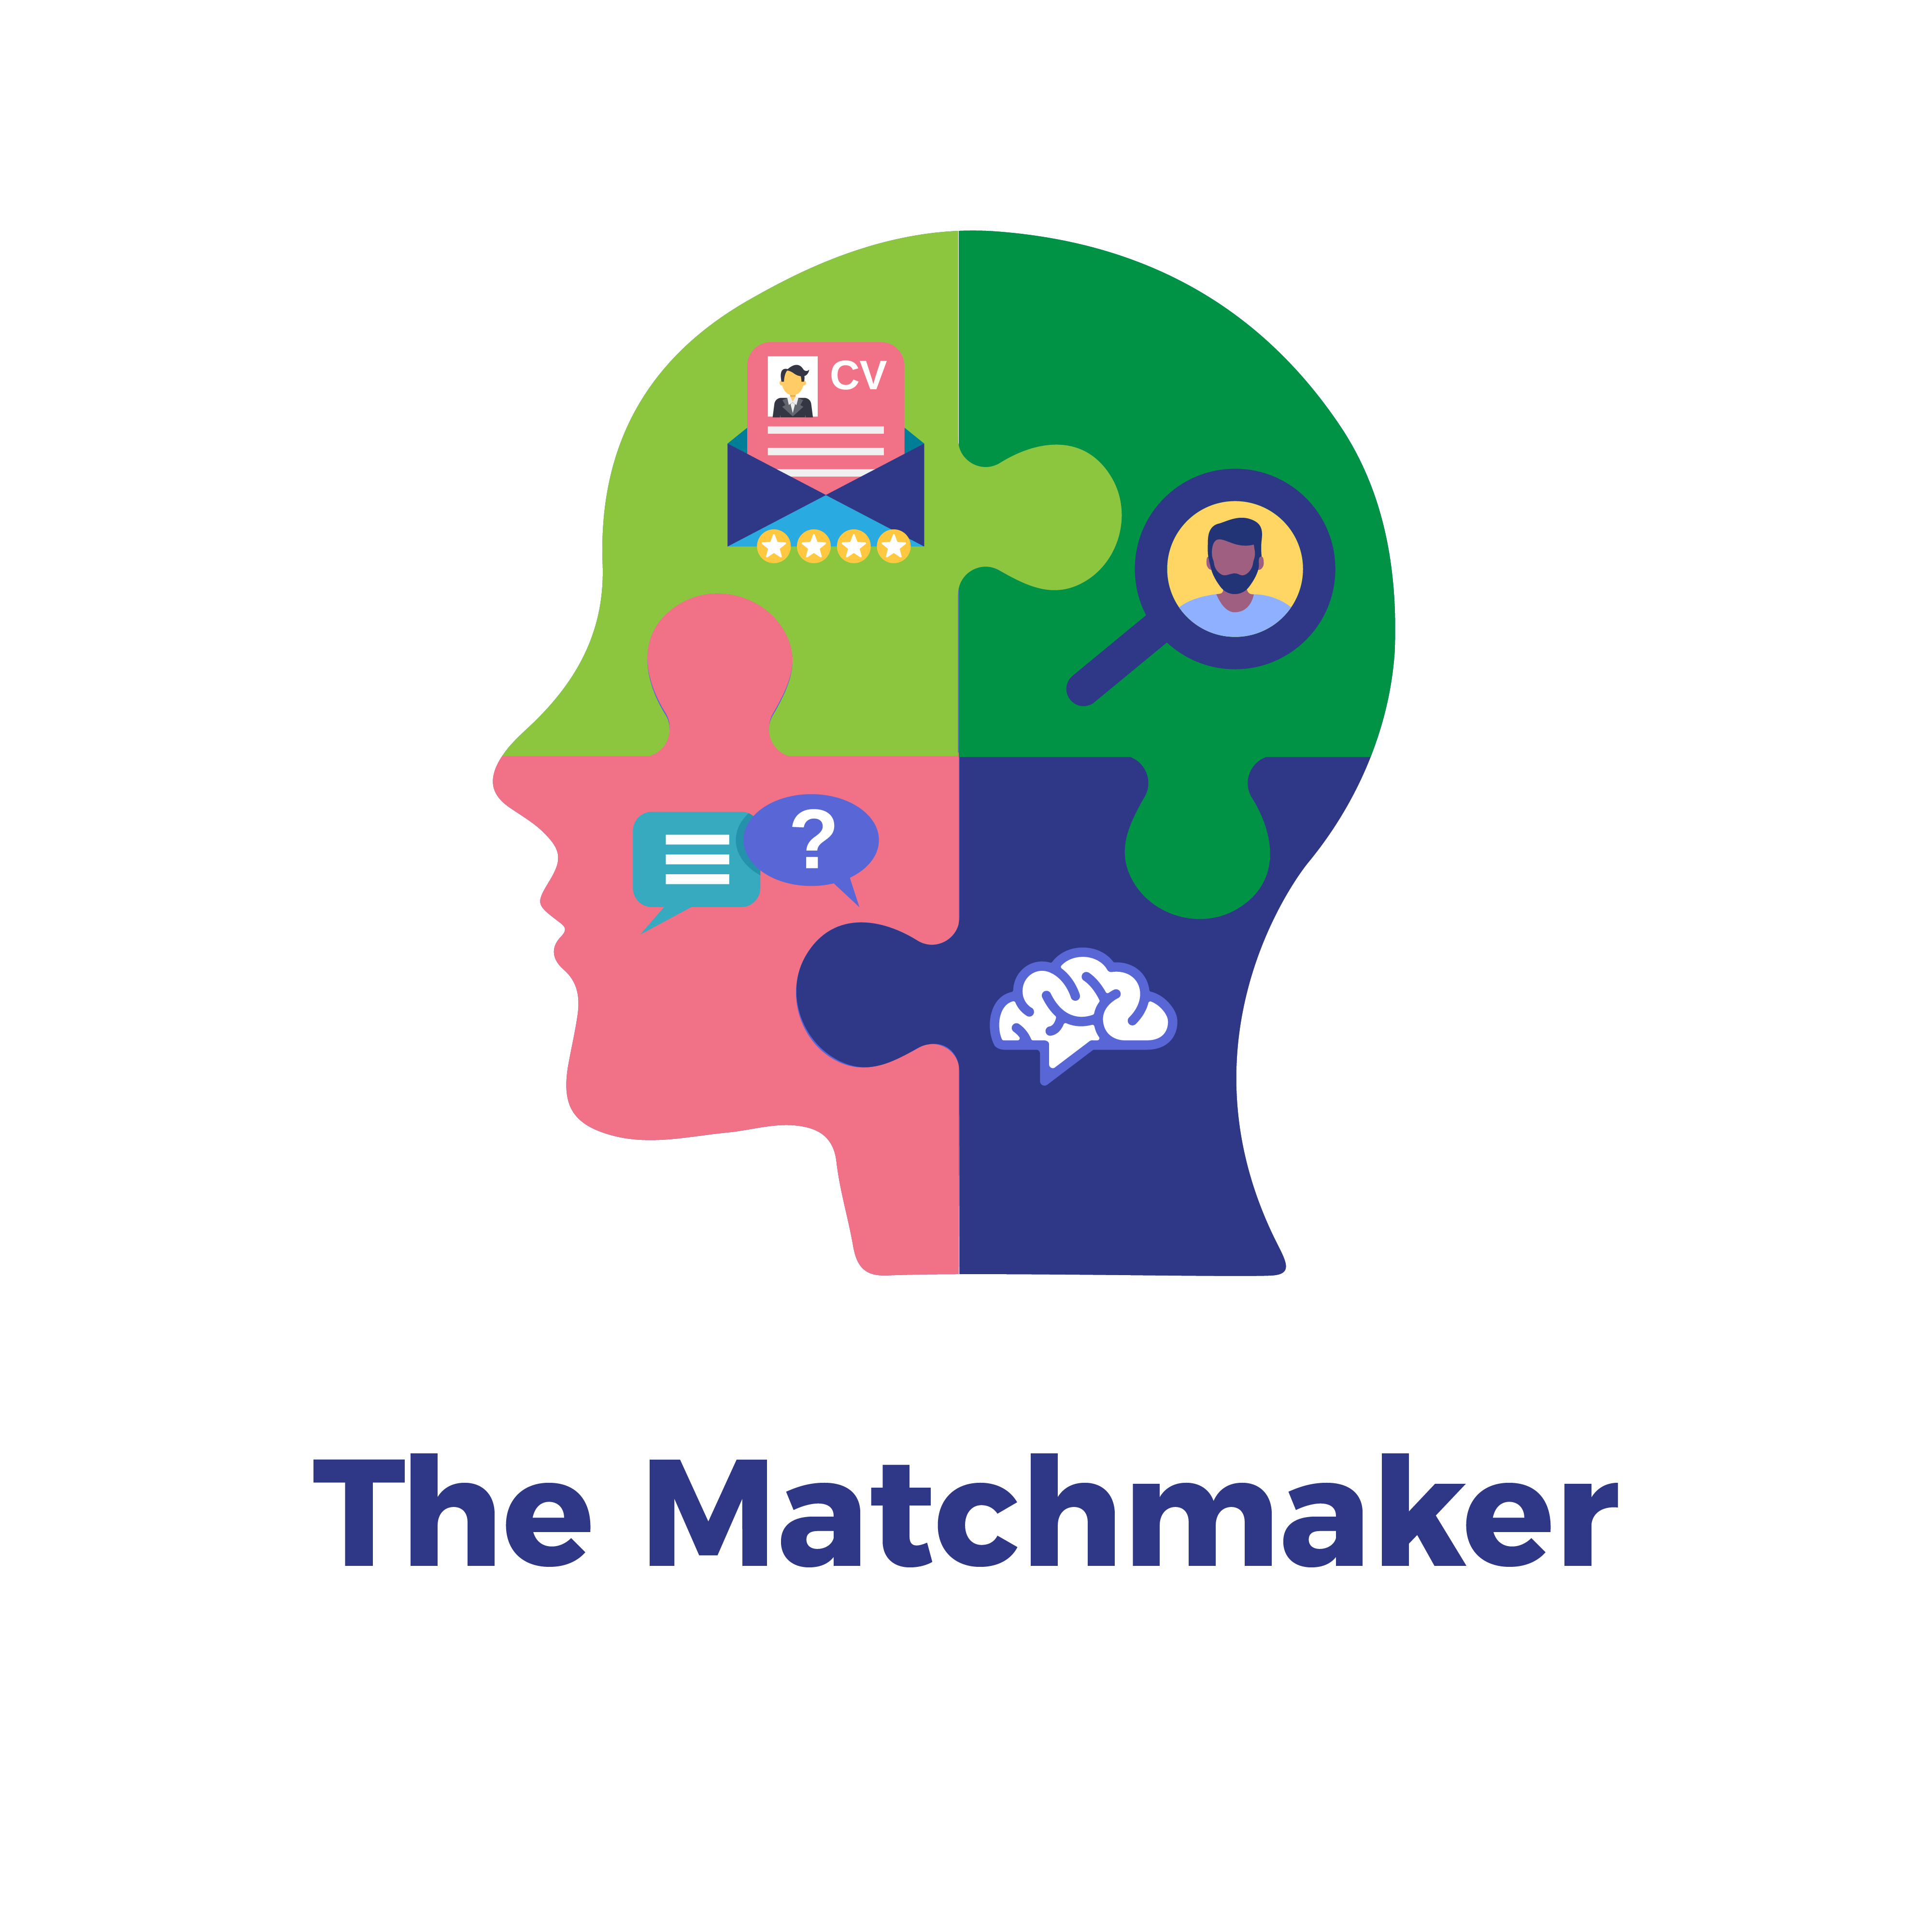 Matchmaker